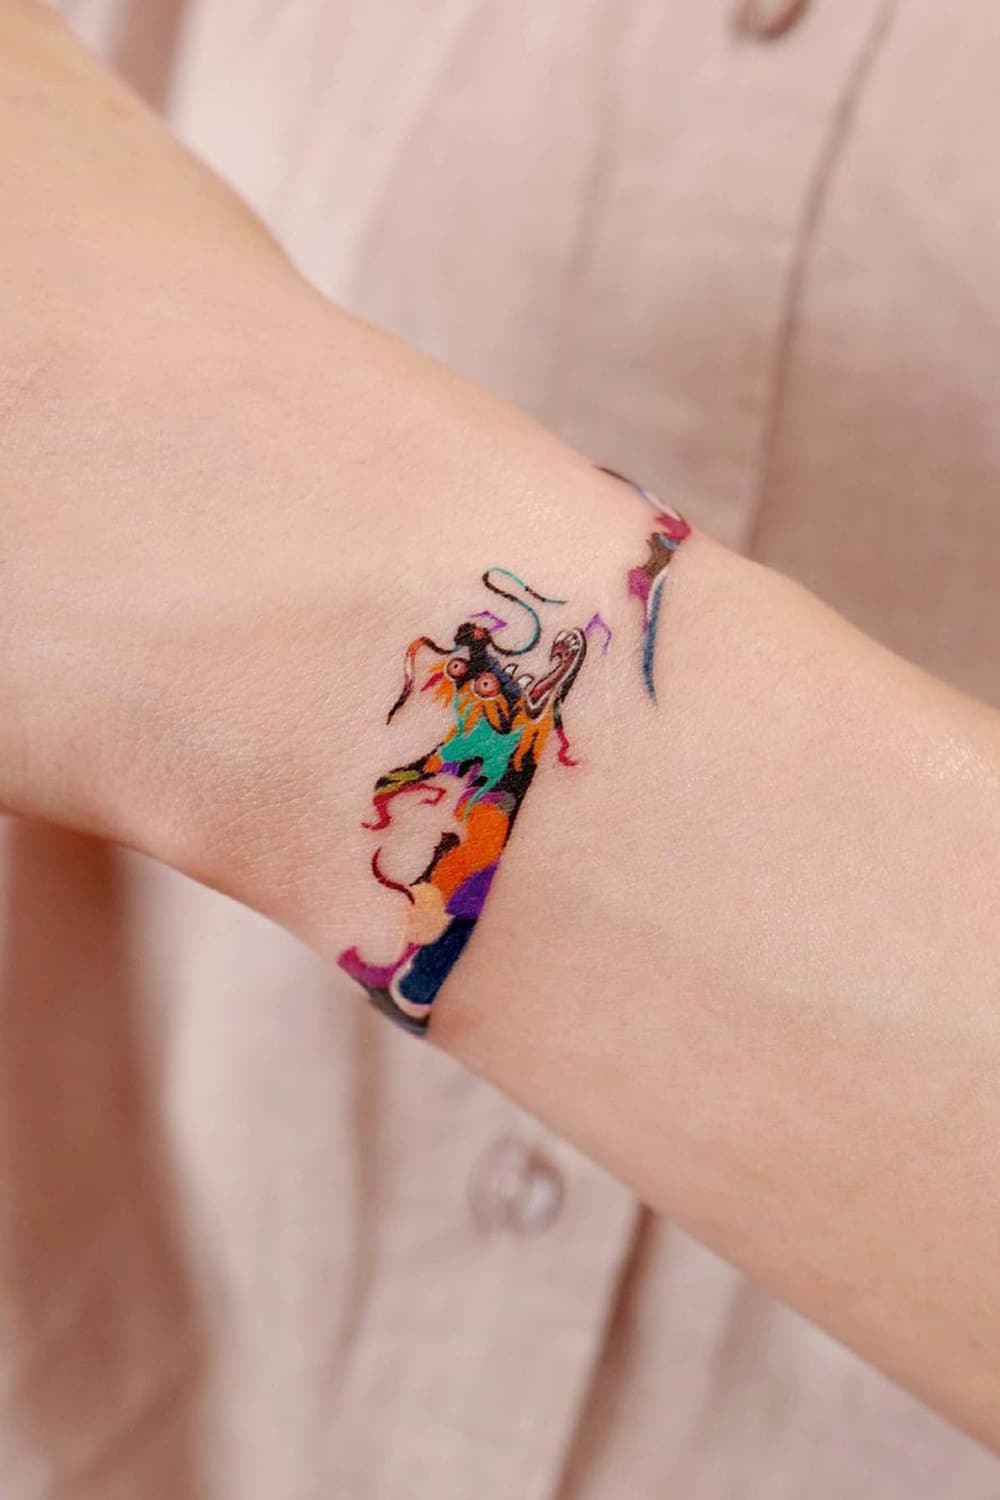 Dragon armband tattoo